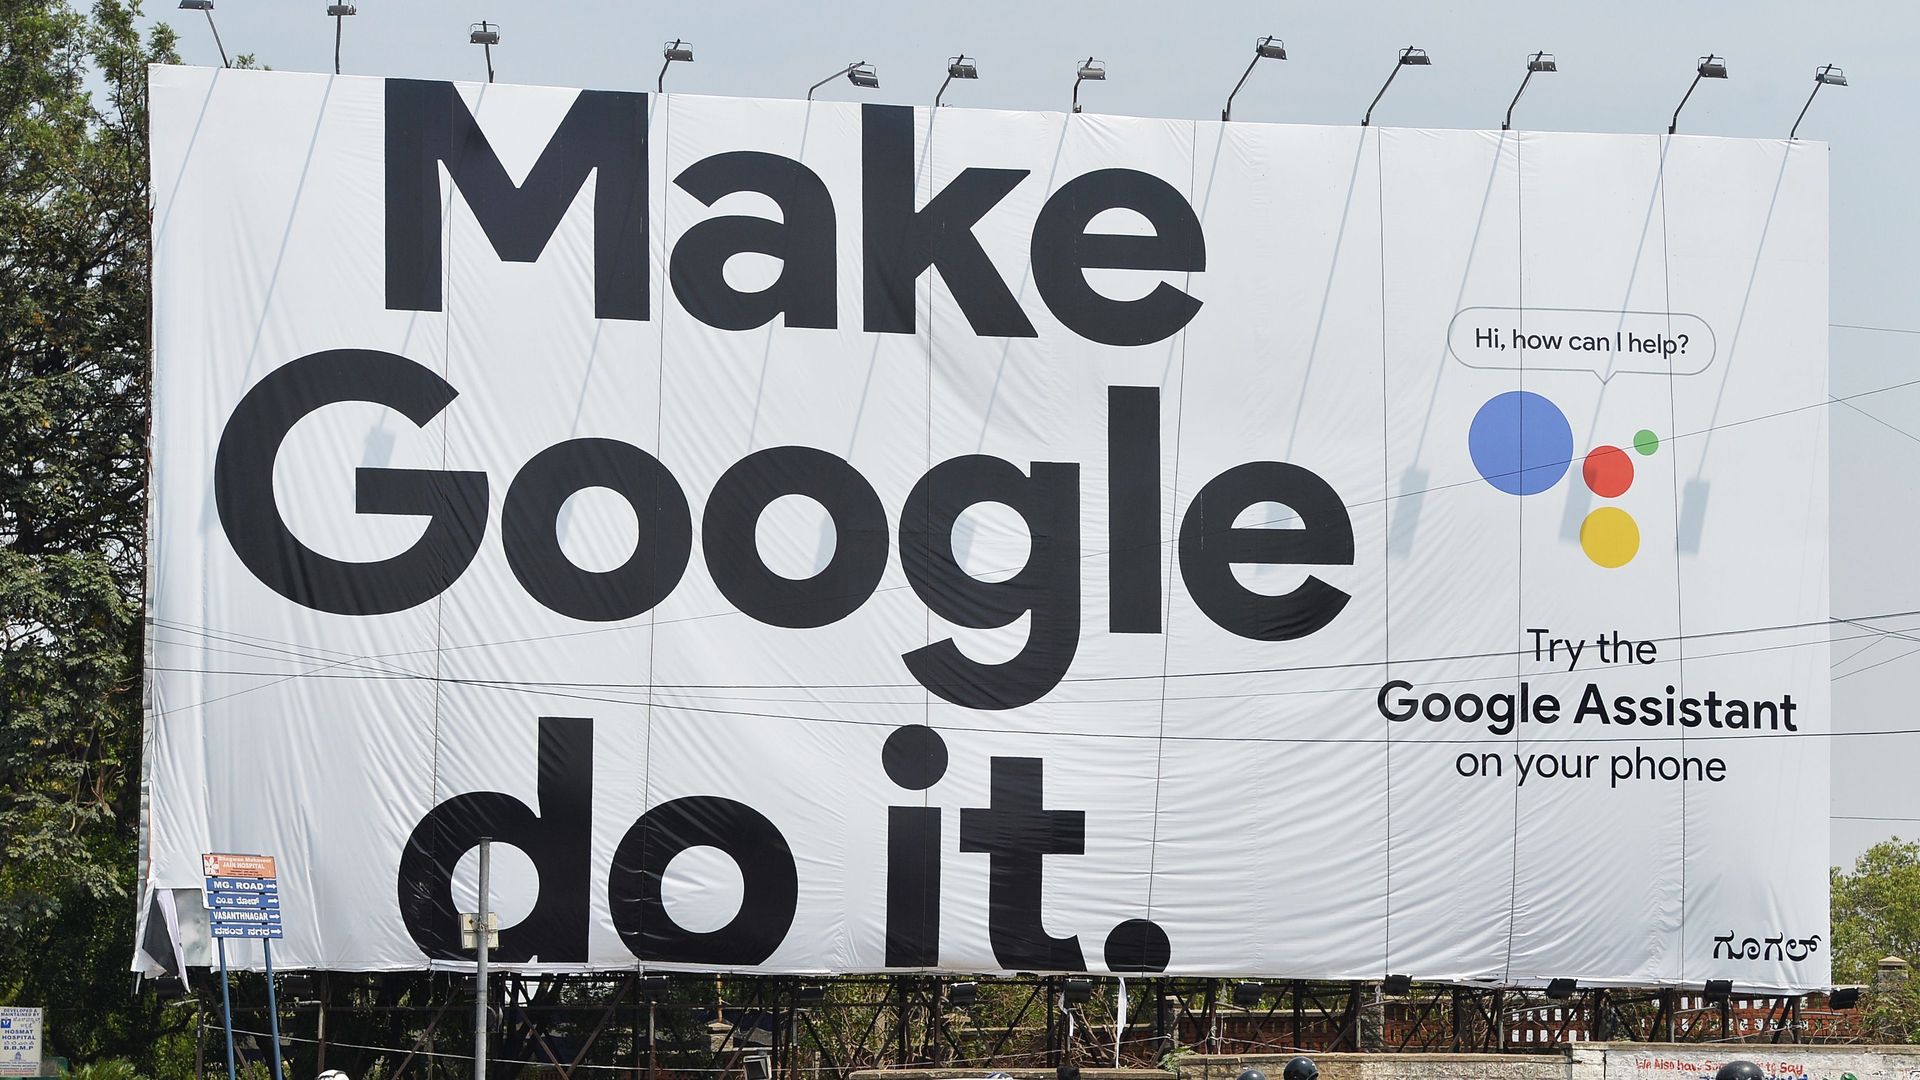 Ad billboard reading "Make Google do it." 